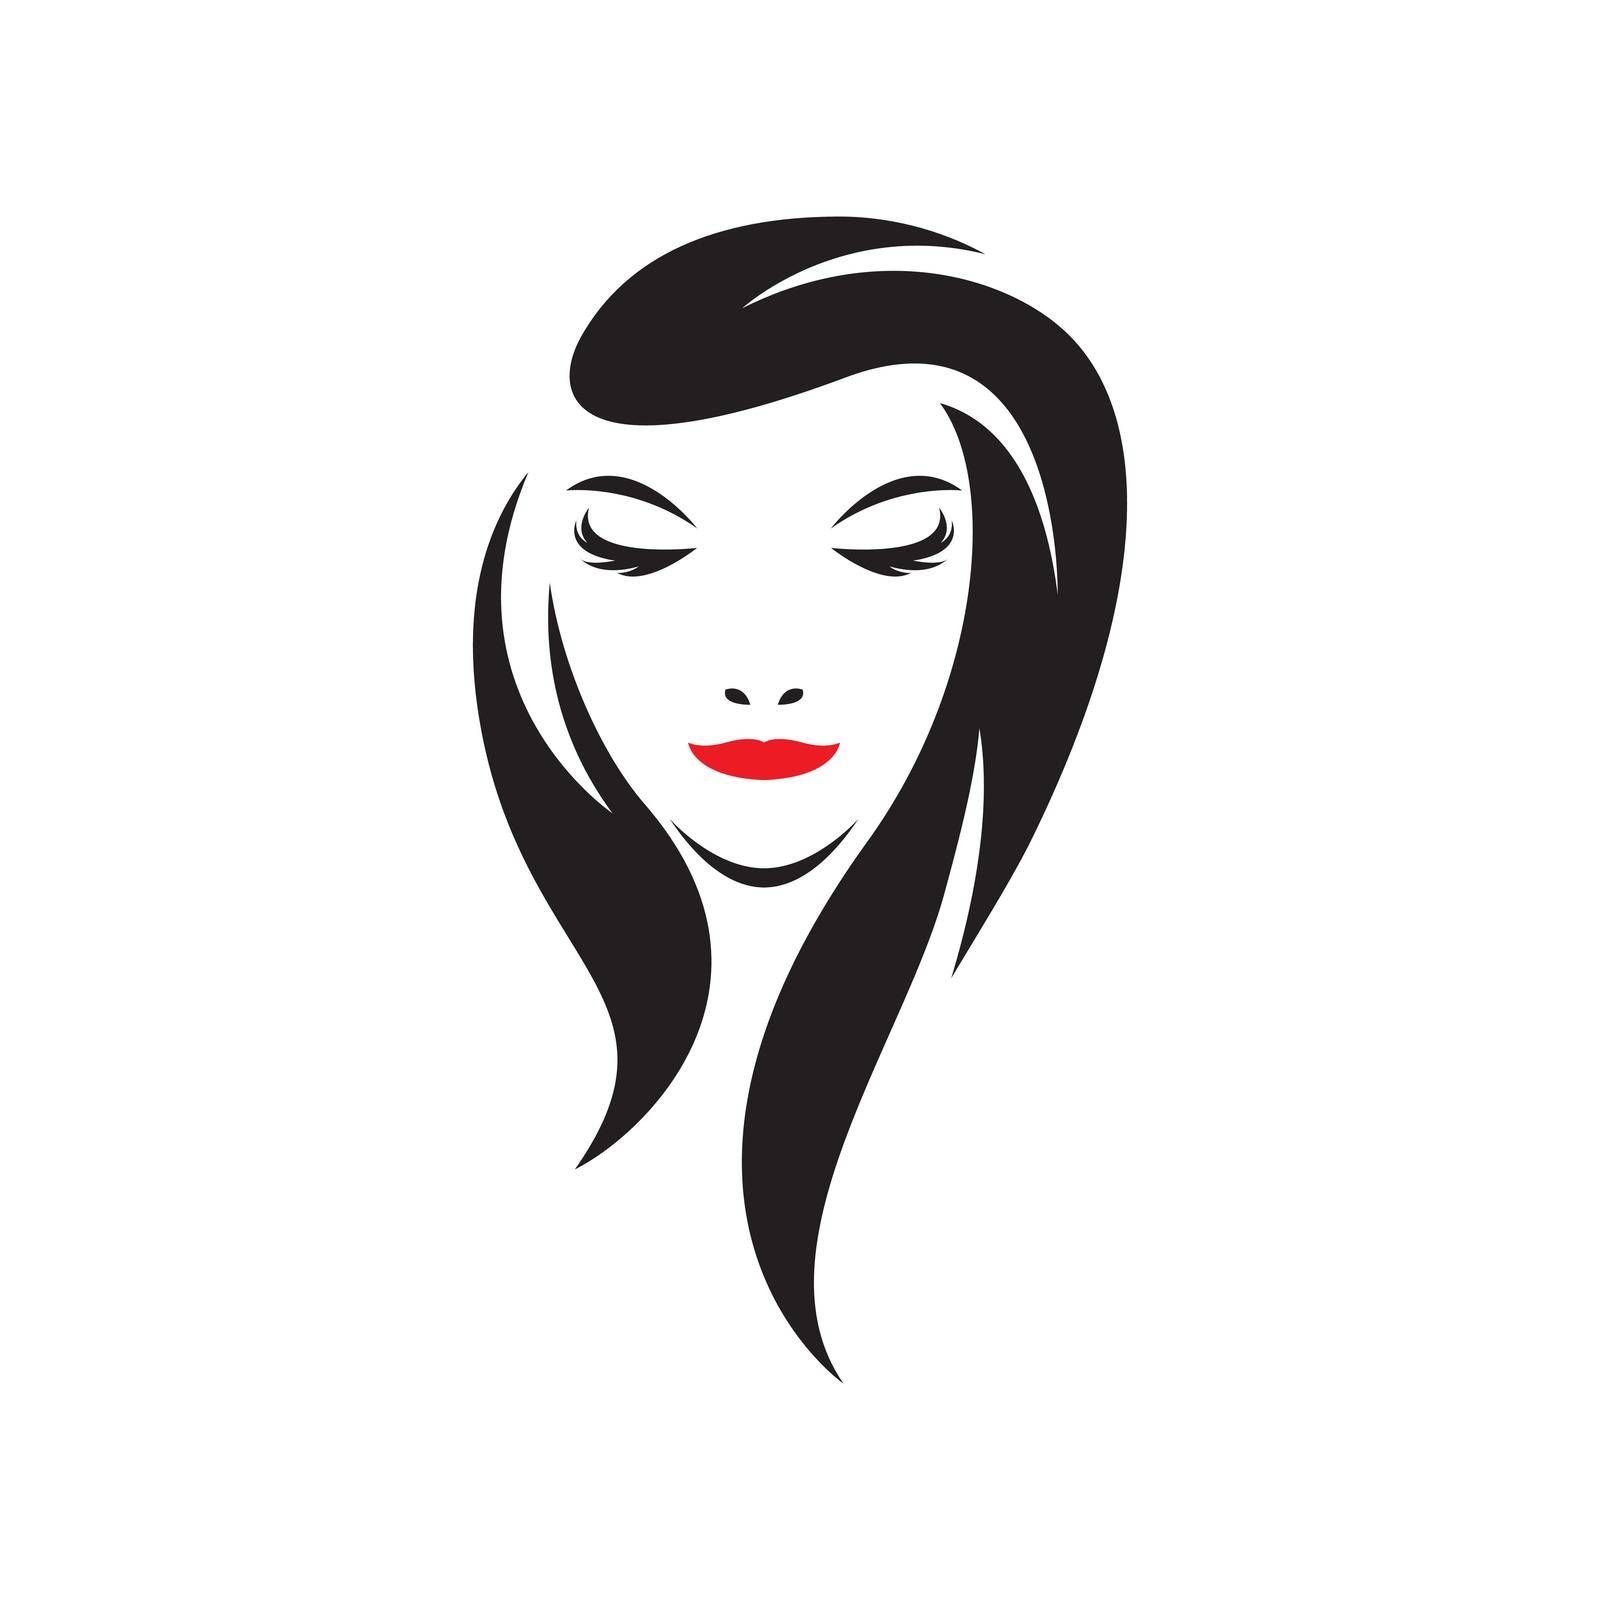 Beauty hair and salon logo images illustration design